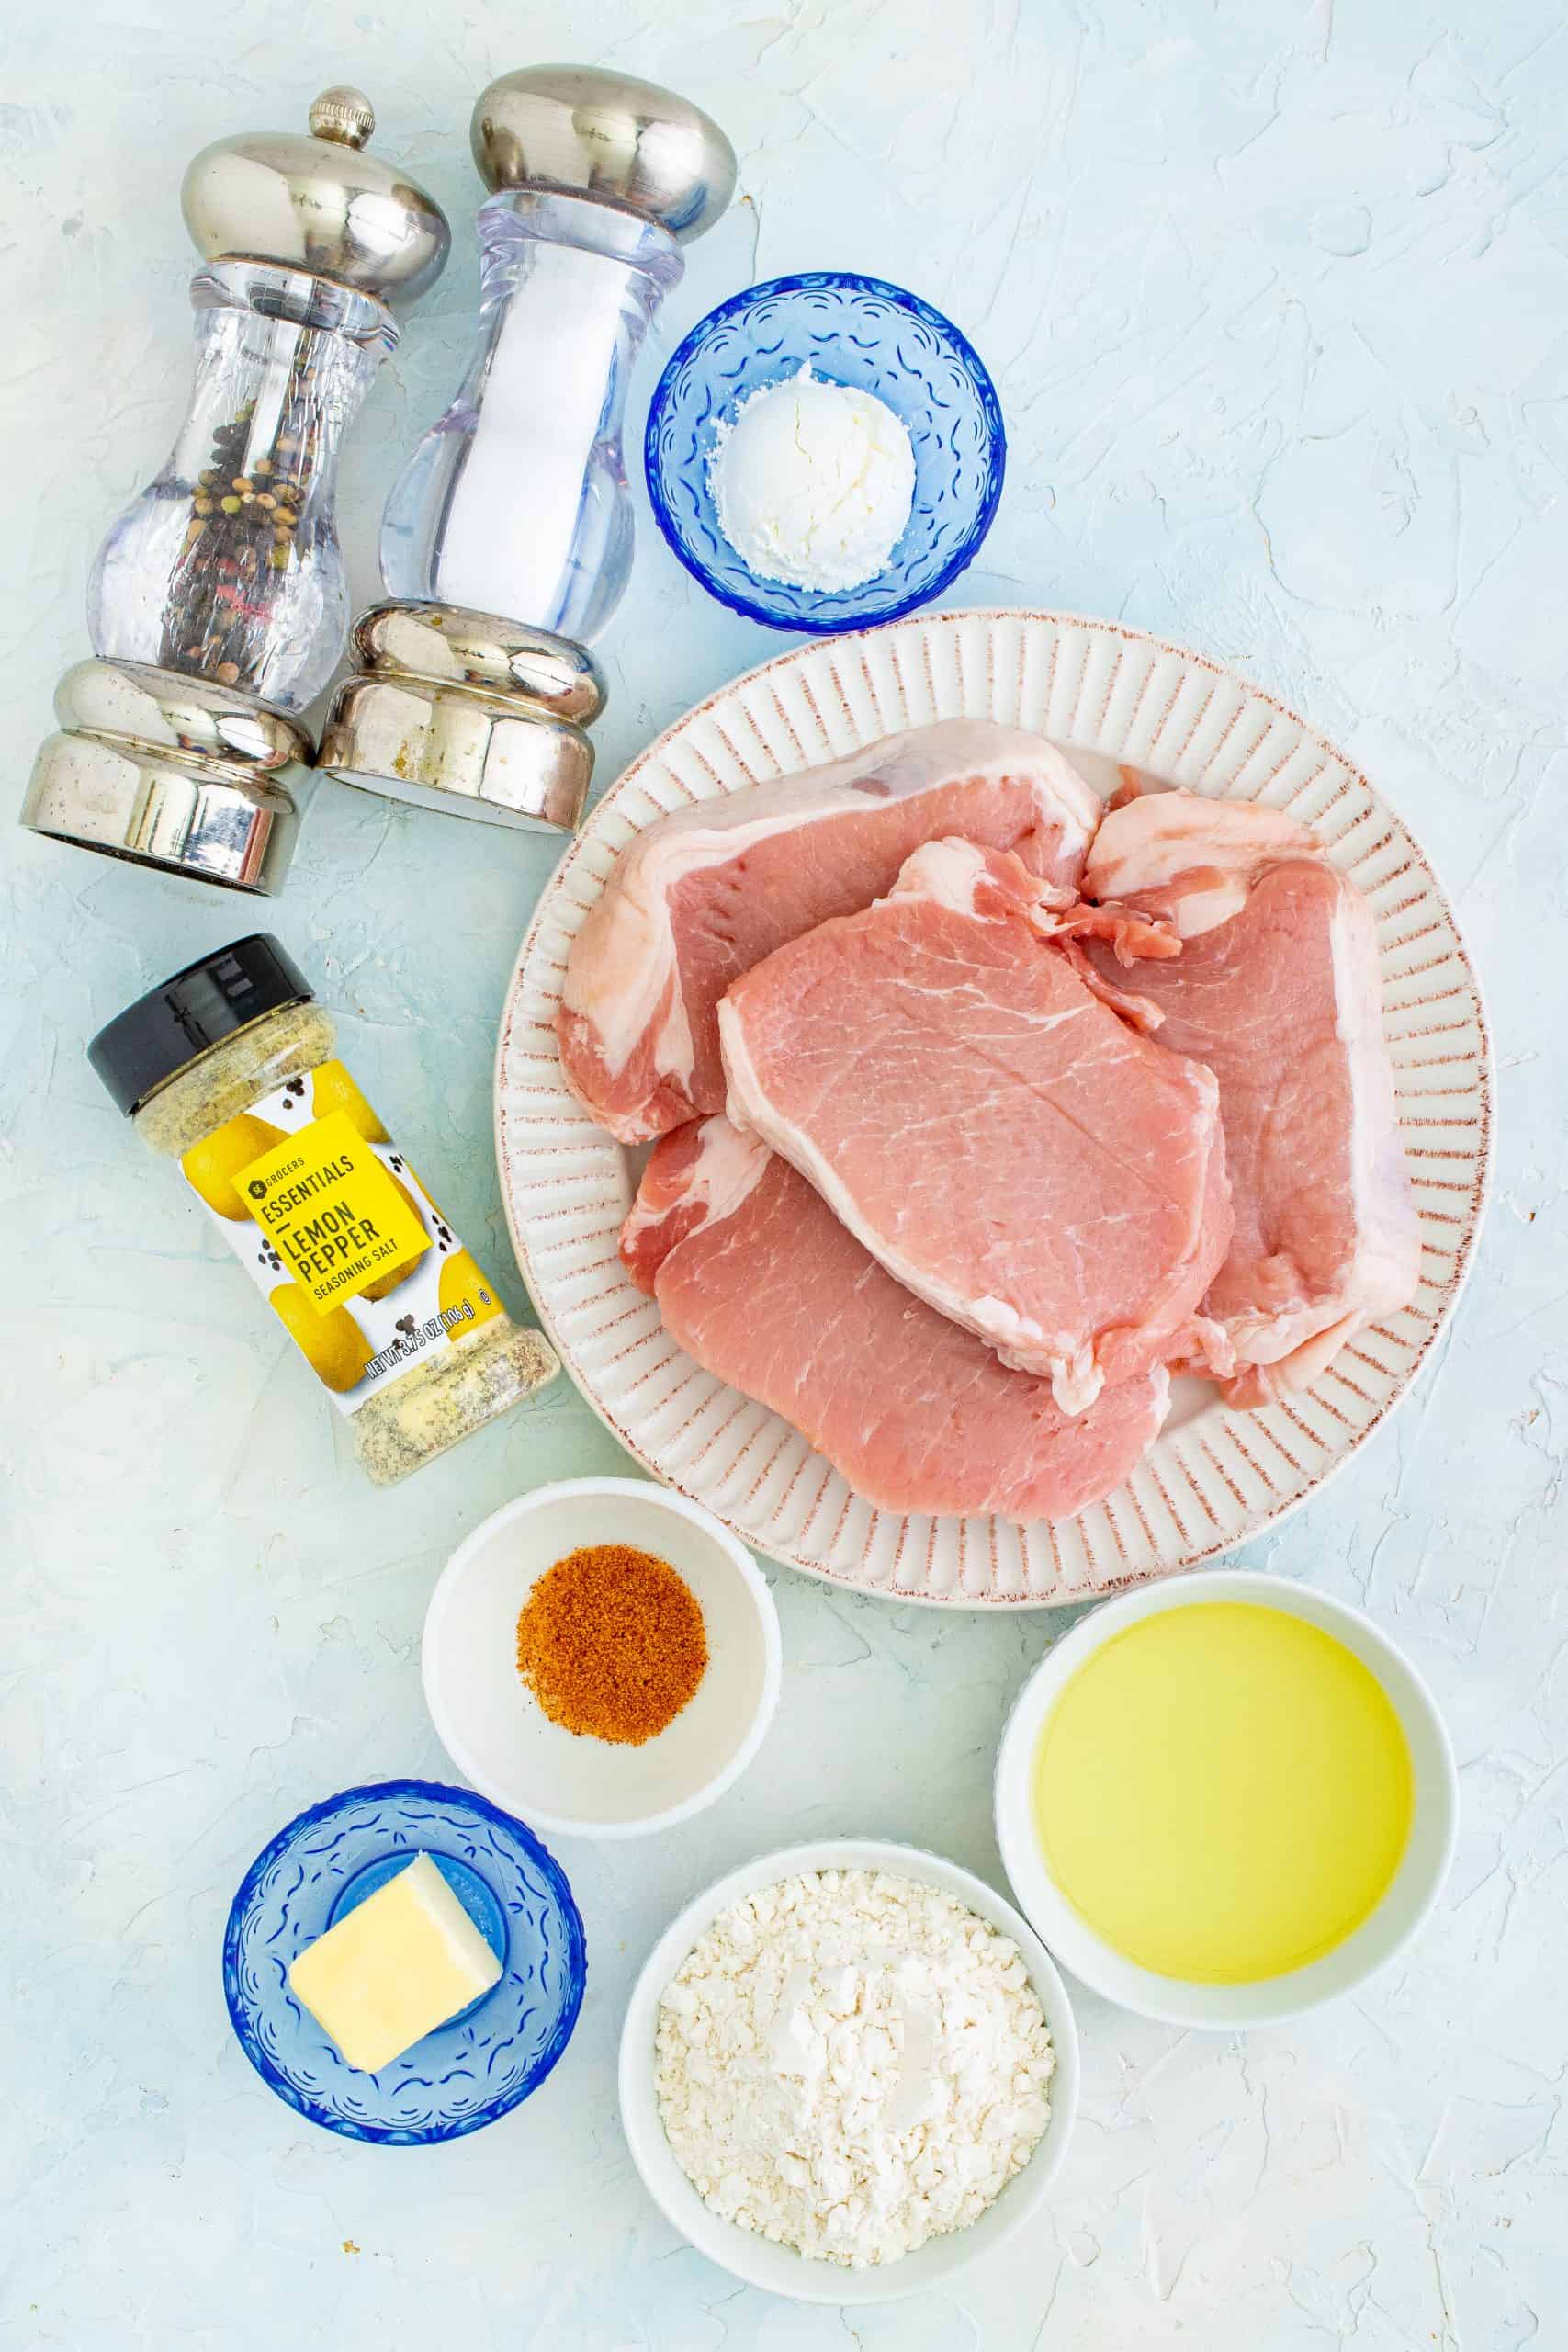 Ingredients for Pan Fried Pork Chops: boneless pork chops, vegetable oil, salted butter, all-purpose flour, corn starch, lemon pepper seasoning, cajun seasoning, salt and pepper